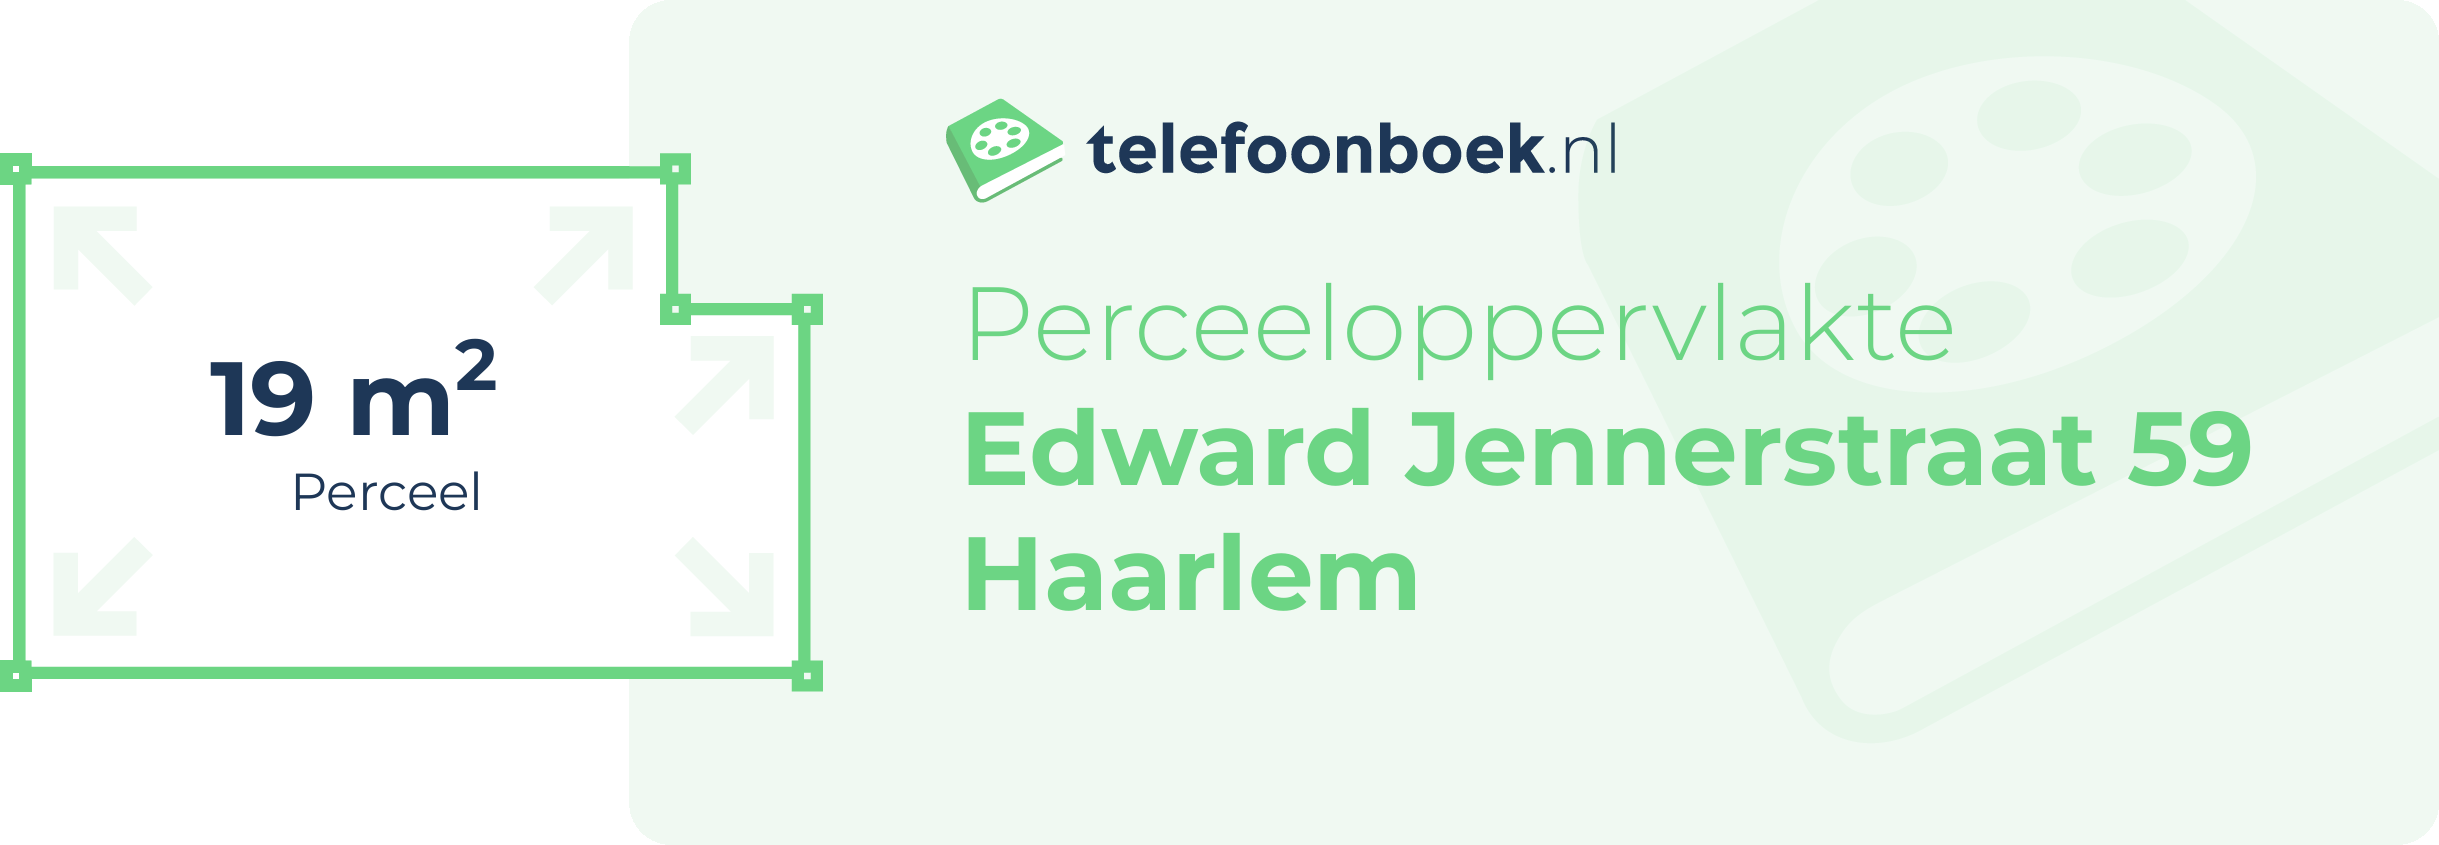 Perceeloppervlakte Edward Jennerstraat 59 Haarlem